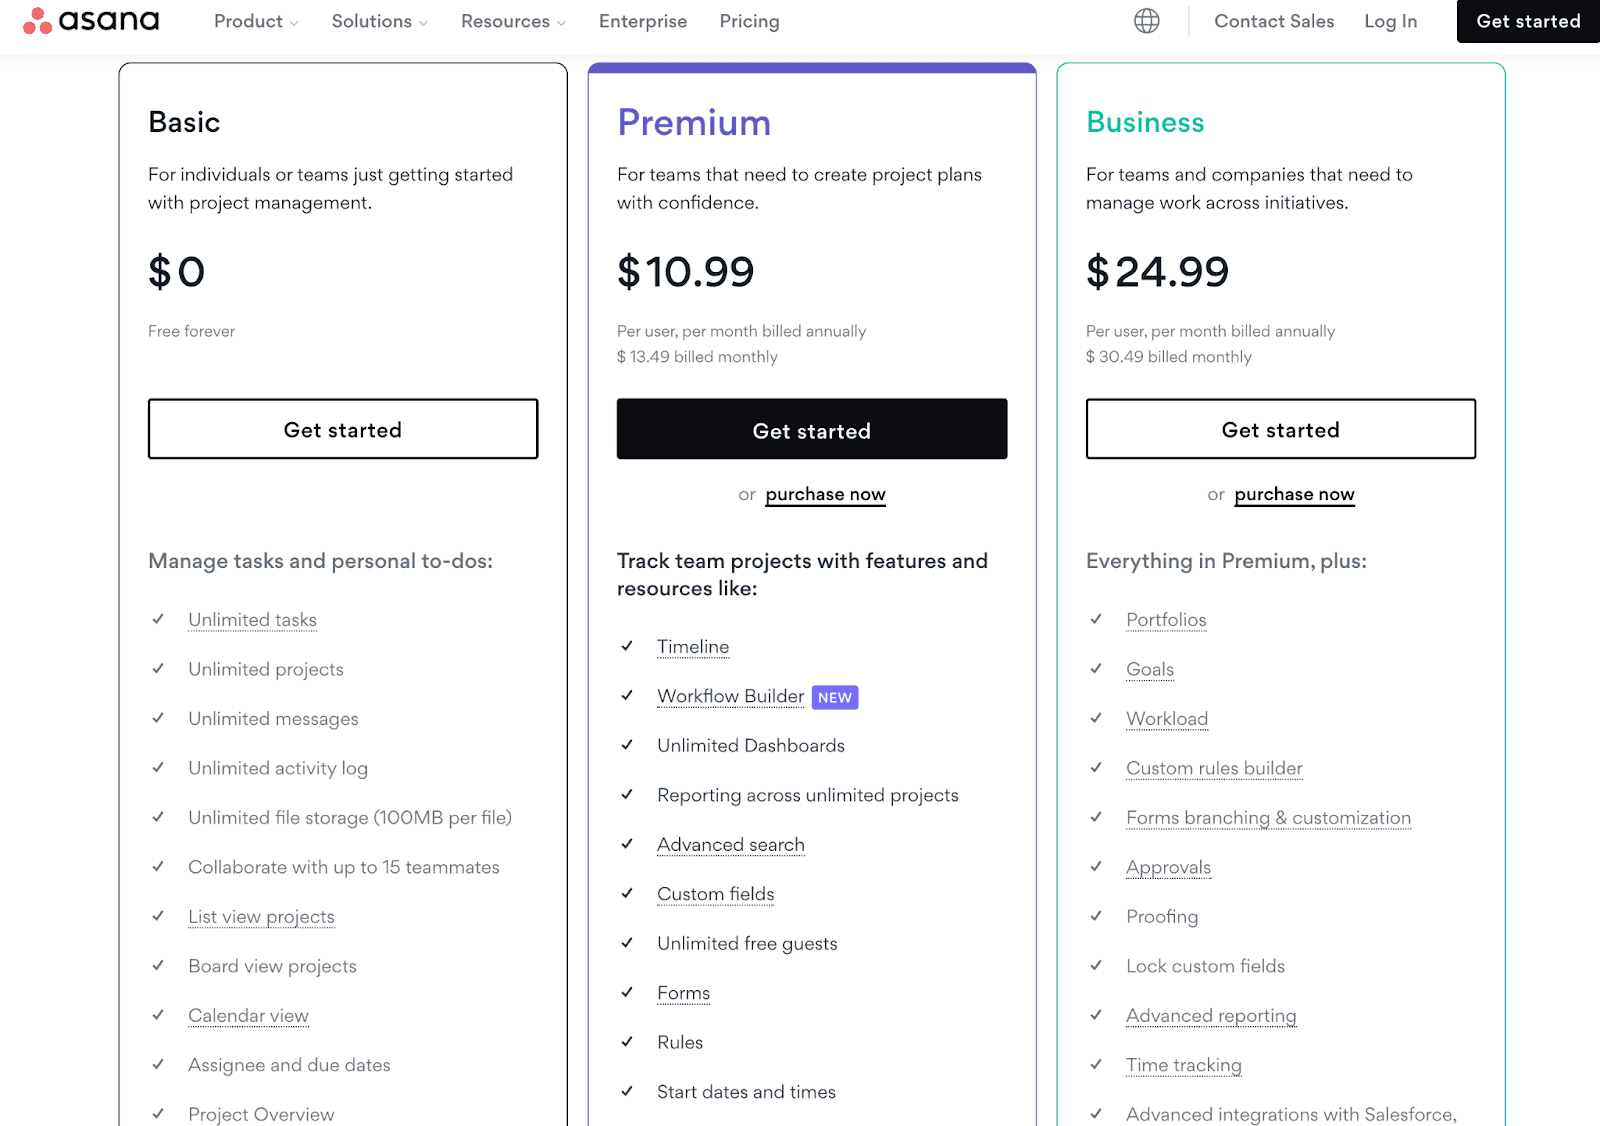 Asana pricing - basic($0), premium($10.99), business($24.99)